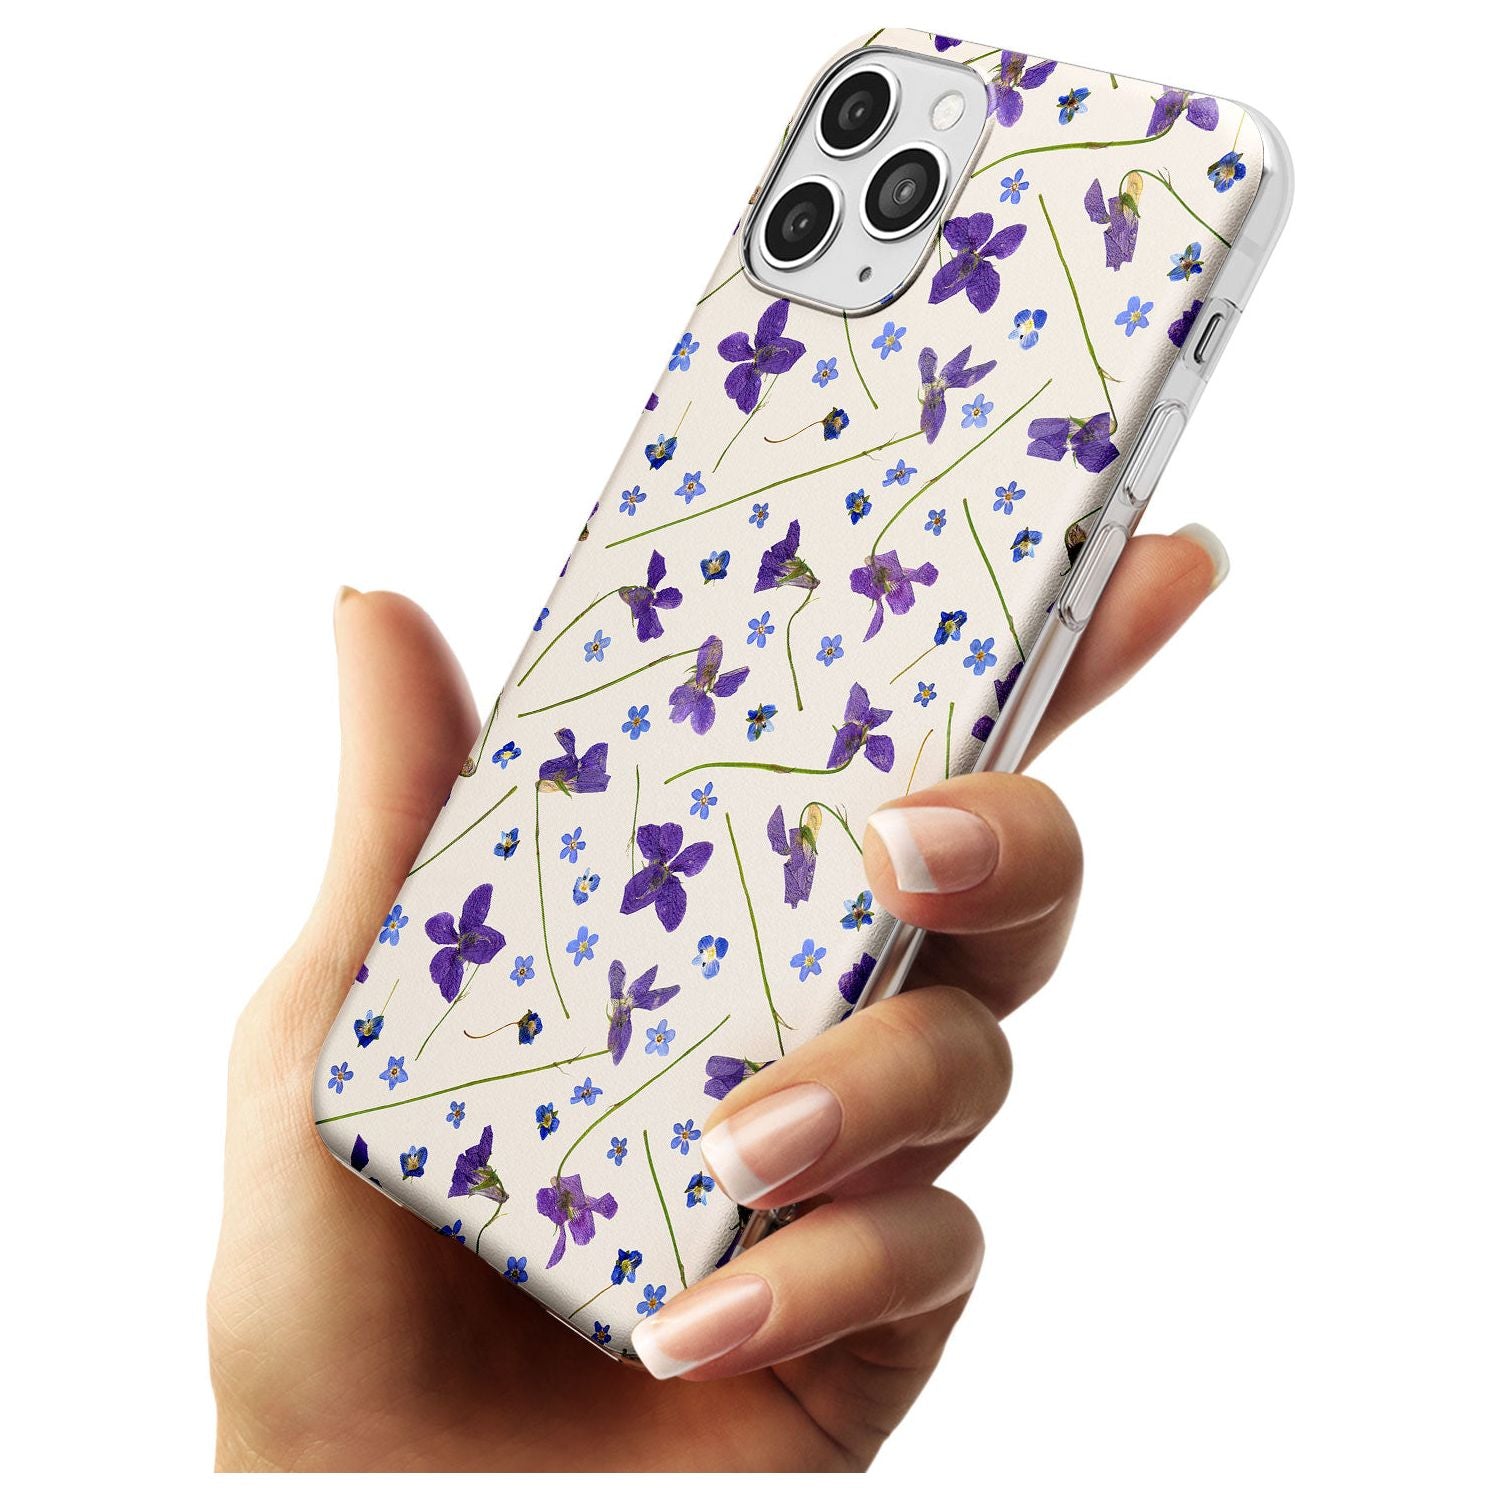 Violet Floral Pattern Design - Cream Slim TPU Phone Case for iPhone 11 Pro Max